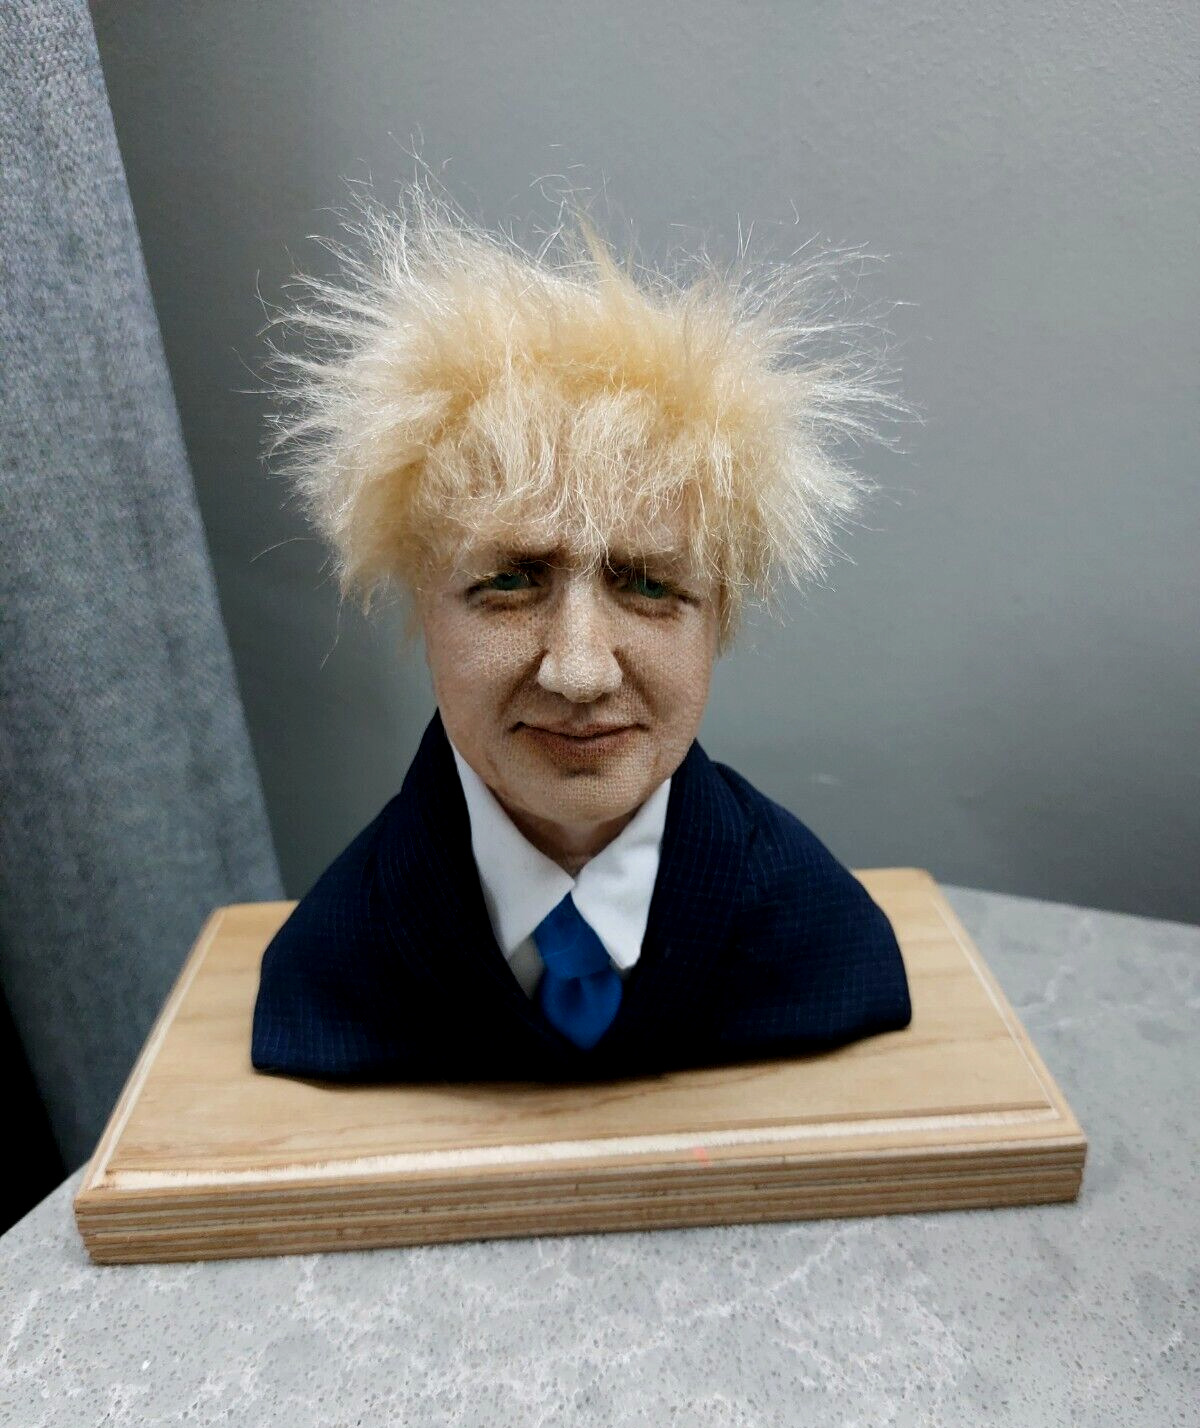 Boris Johnson Doll Toy Bust Made in Ukraine Political Leader Prime Minister